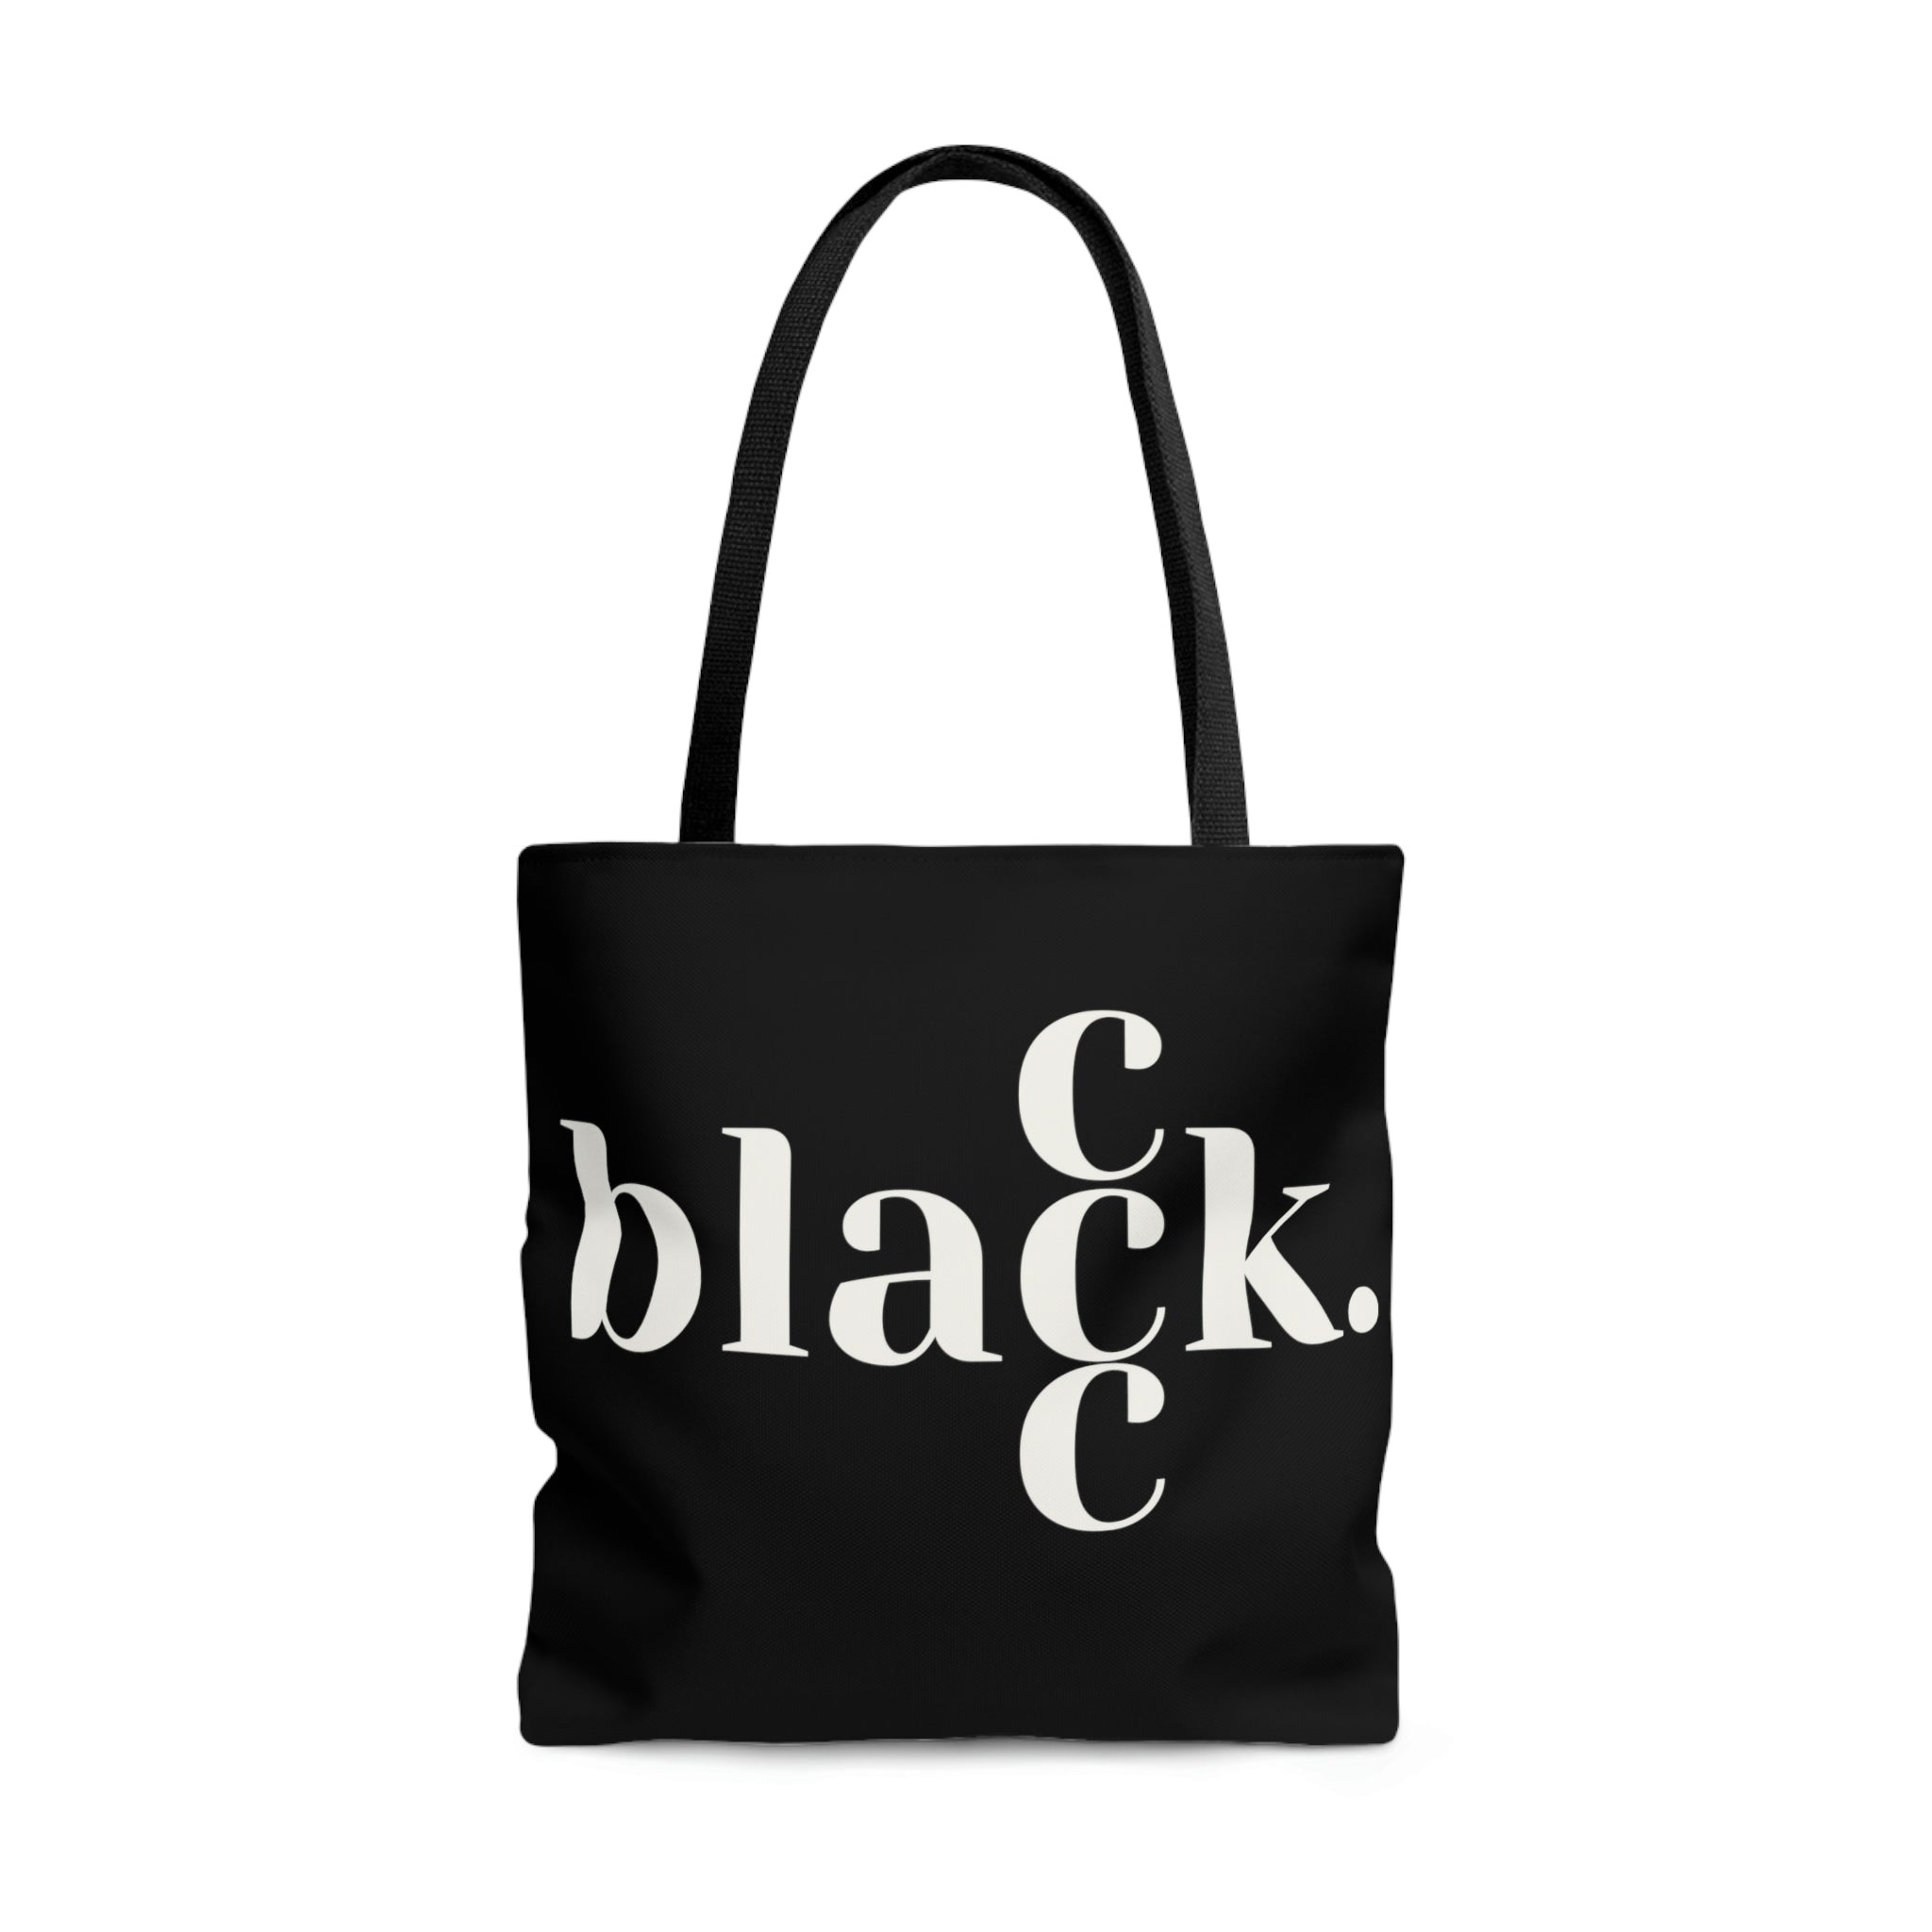 BLACK CCC (BLACK) Tote Bag- Large